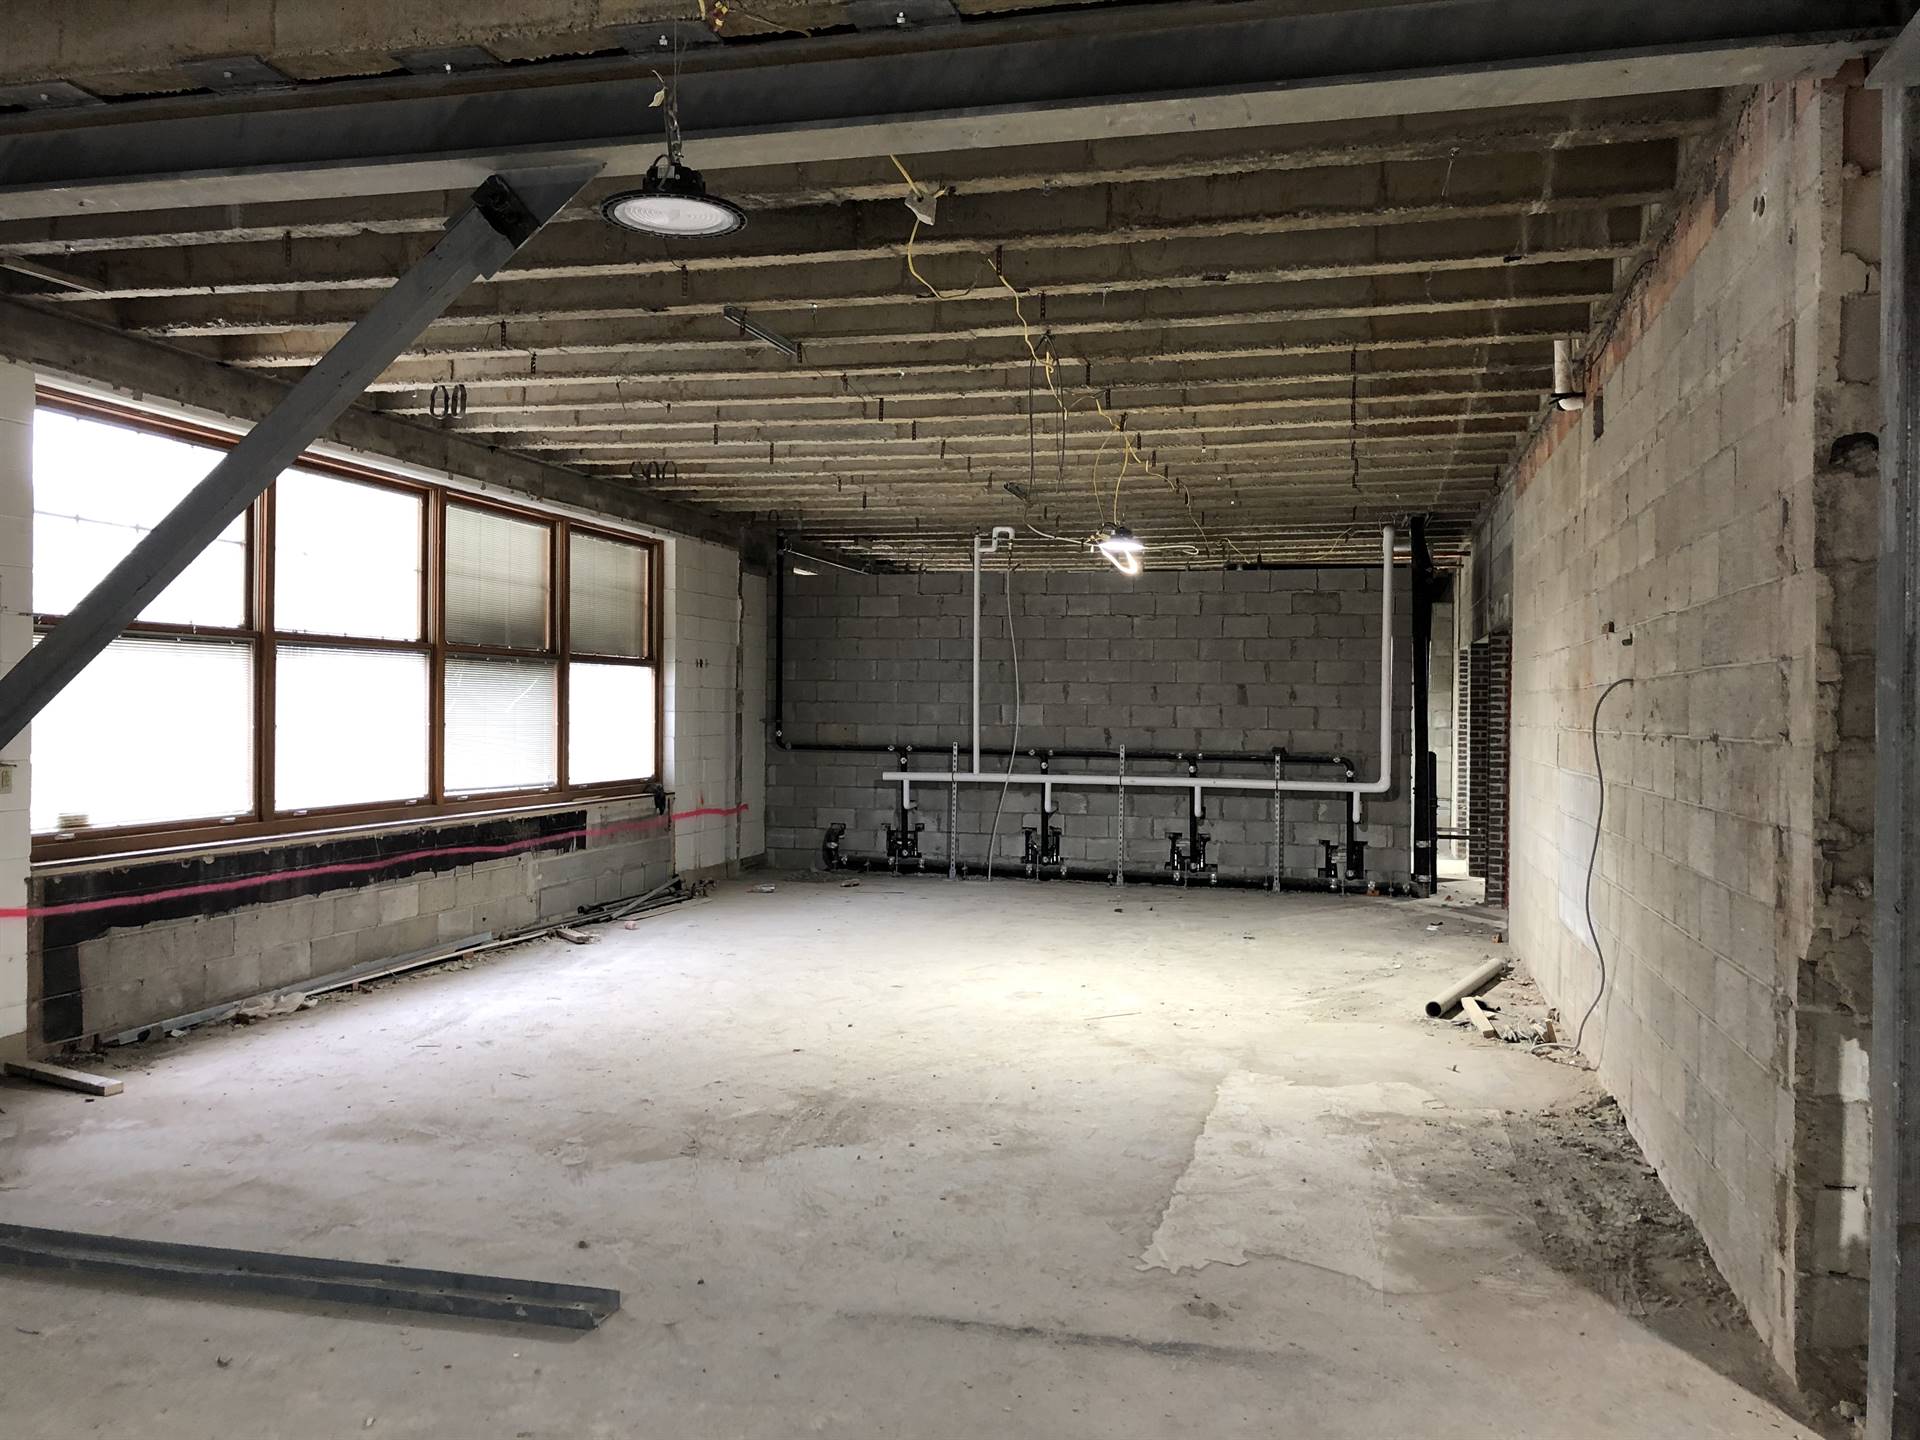 Inside the Barrington Elementary School renovation project